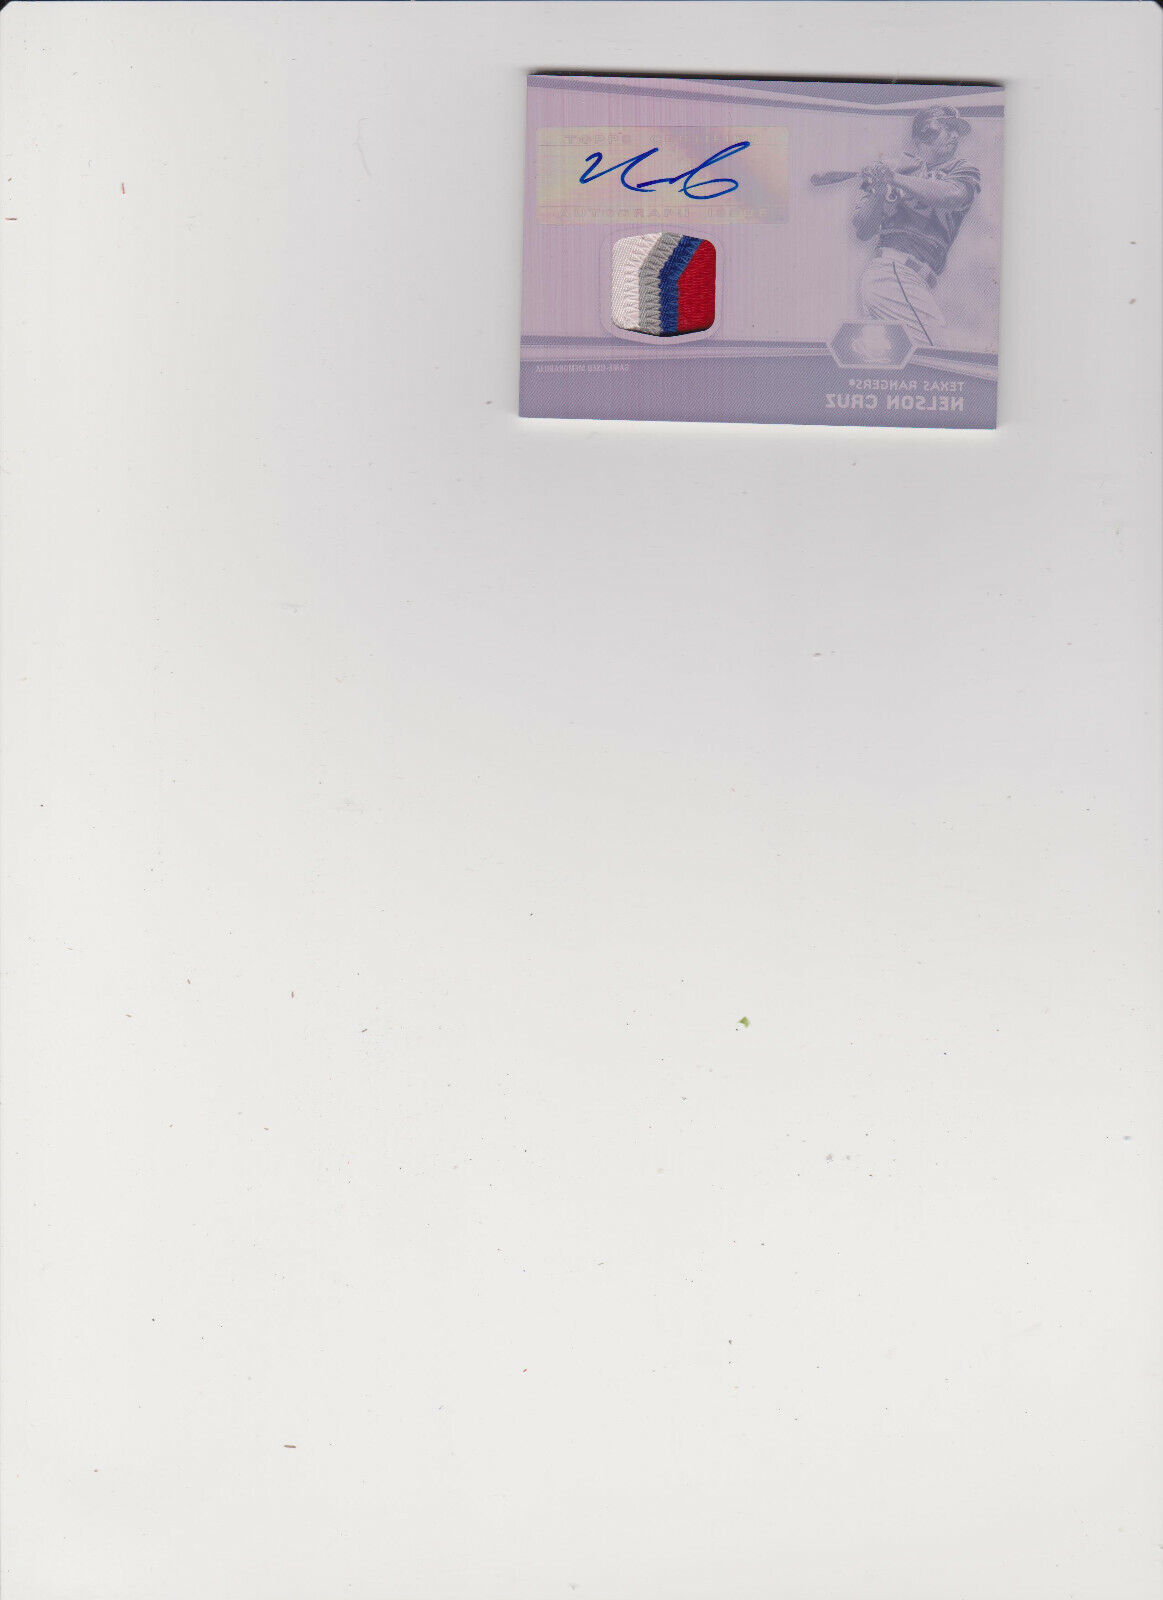 2012 Bowman Platinum Nelson Cruz Press Plate Auto Relic Card #AR-NC #'d 1/1